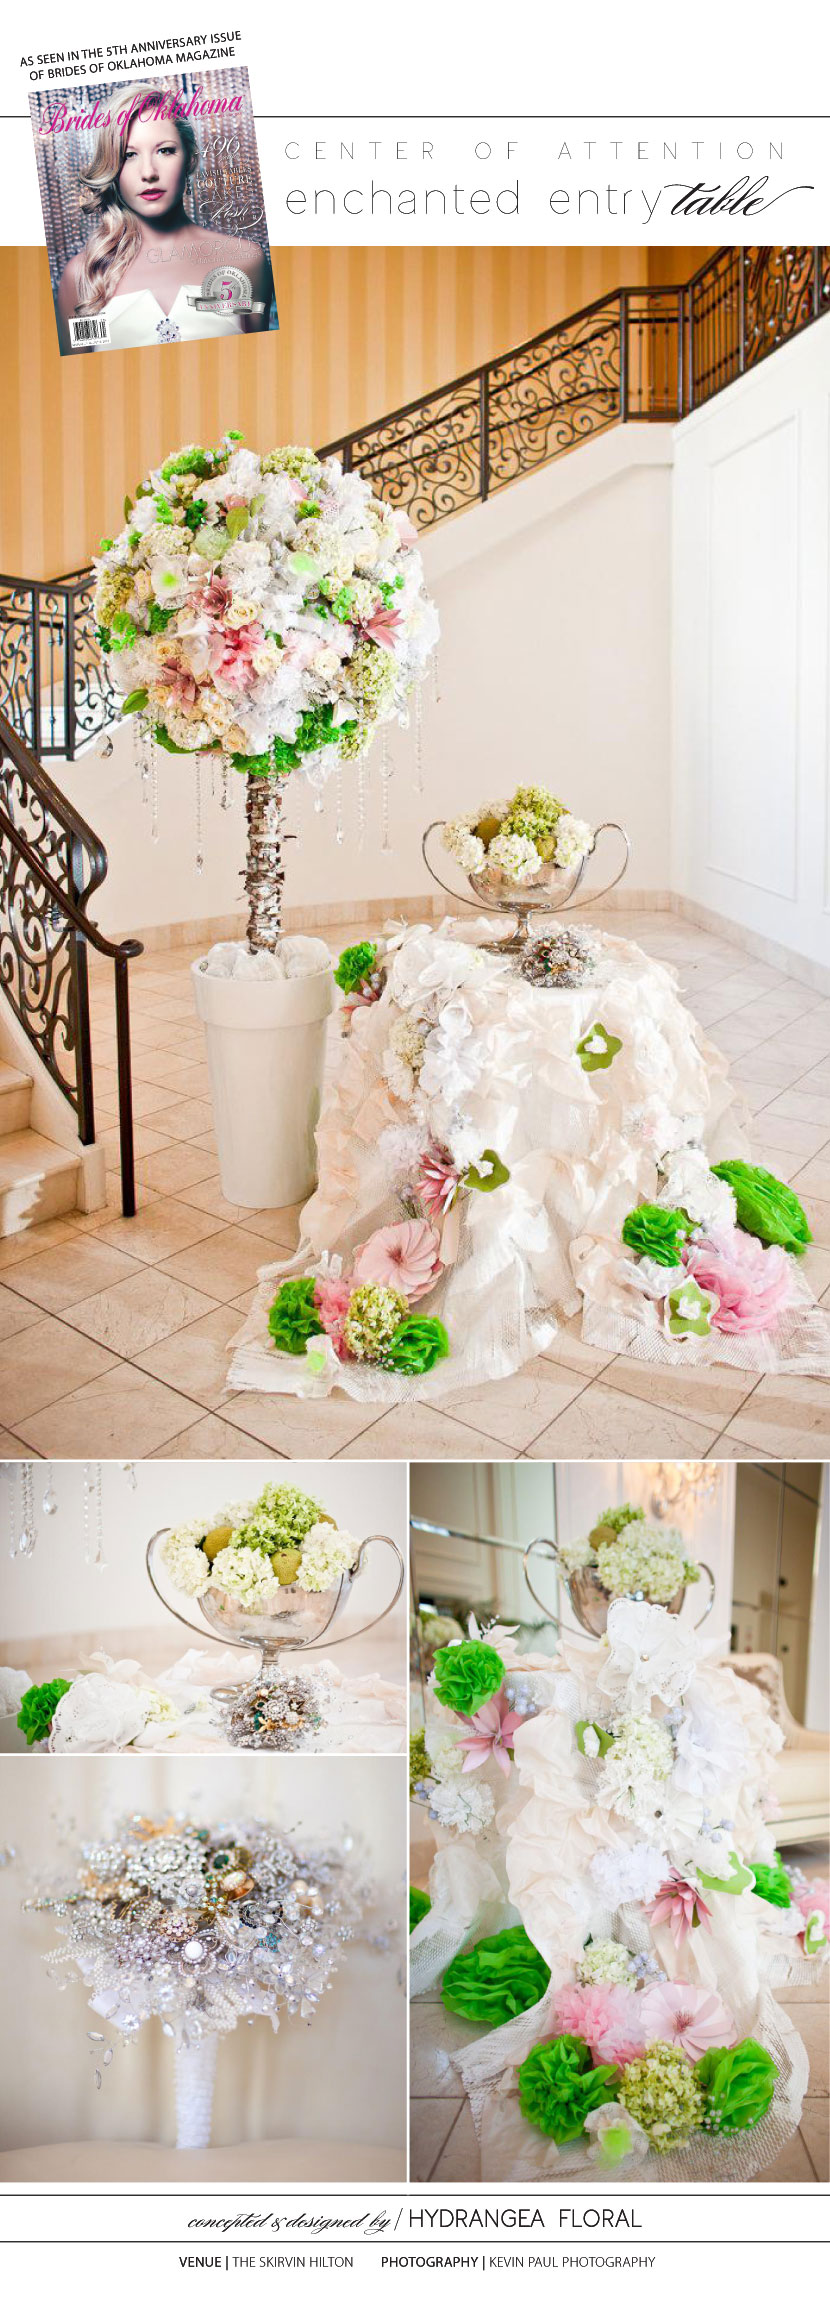 Oklahoma wedding flowers display by Hydrangea Floral